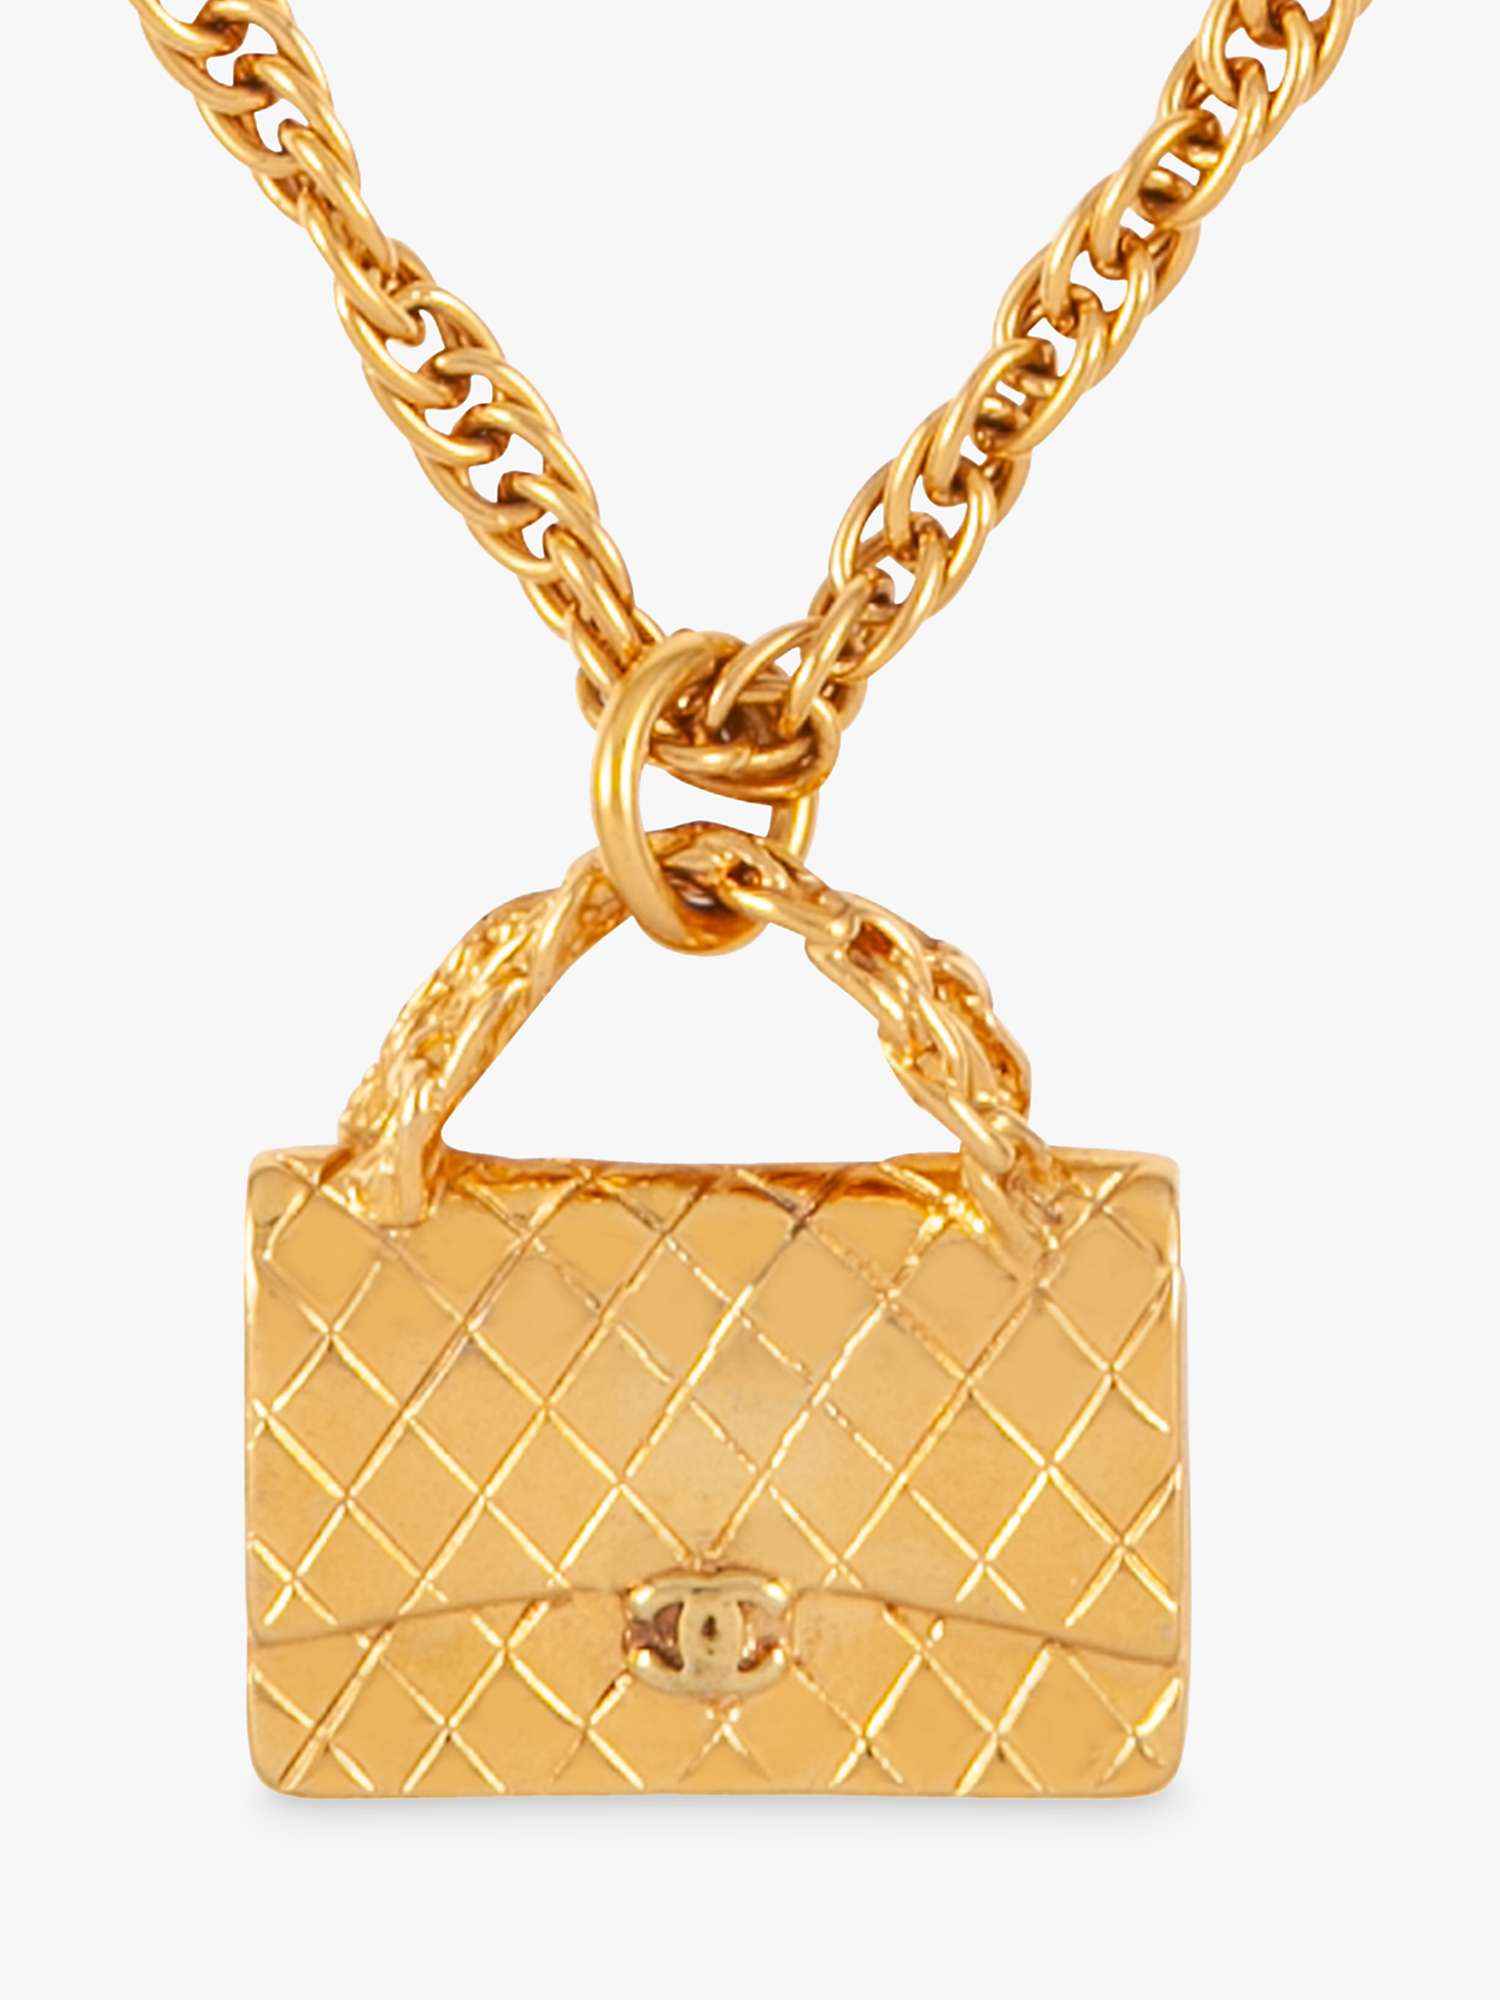 Buy Susan Caplan Vintage Chanel Quilted Bag Pendant Necklace Online at johnlewis.com